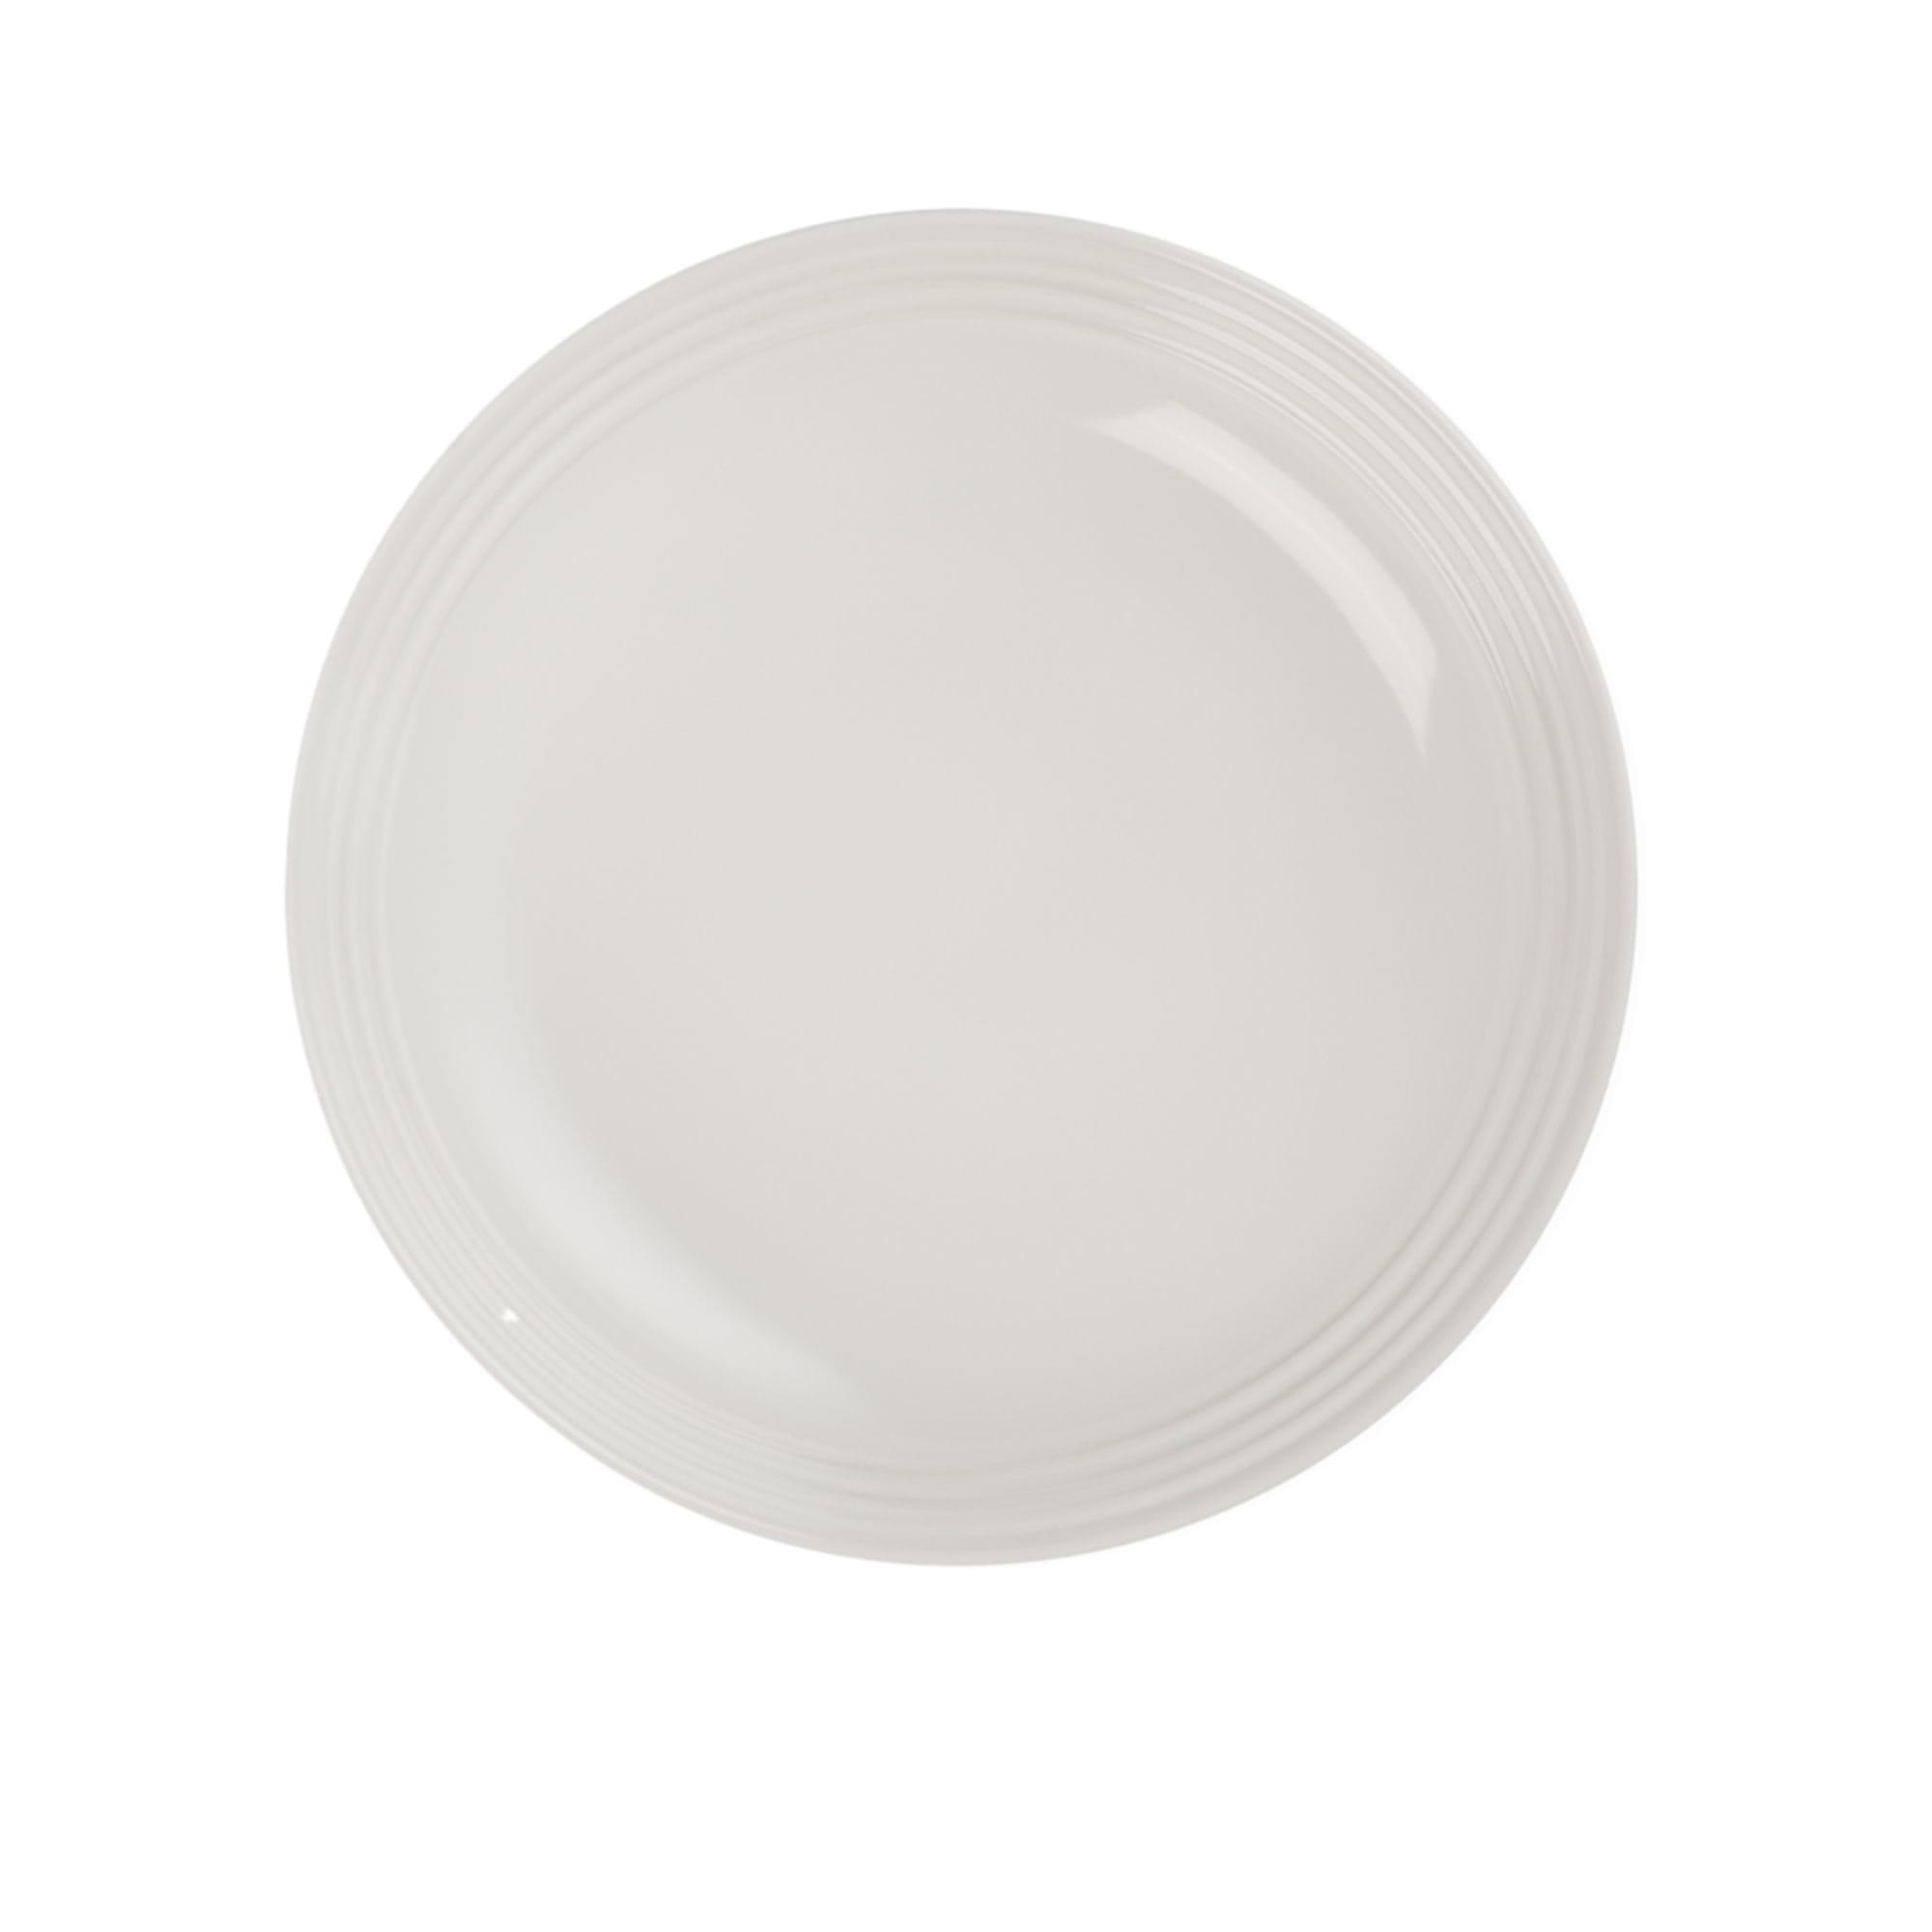 Le Creuset Stoneware Salad Plate 22cm White Image 1